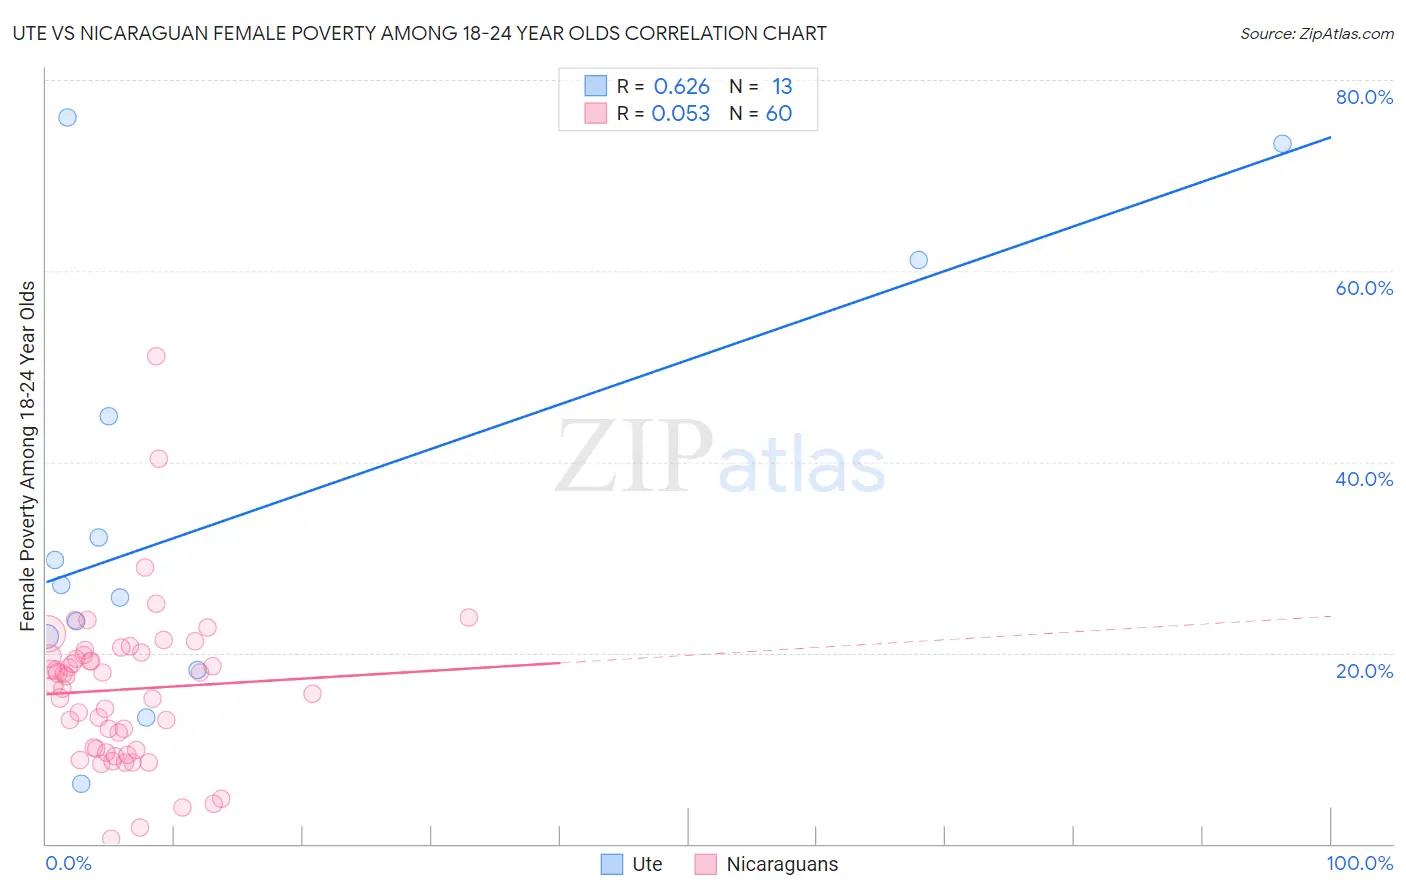 Ute vs Nicaraguan Female Poverty Among 18-24 Year Olds